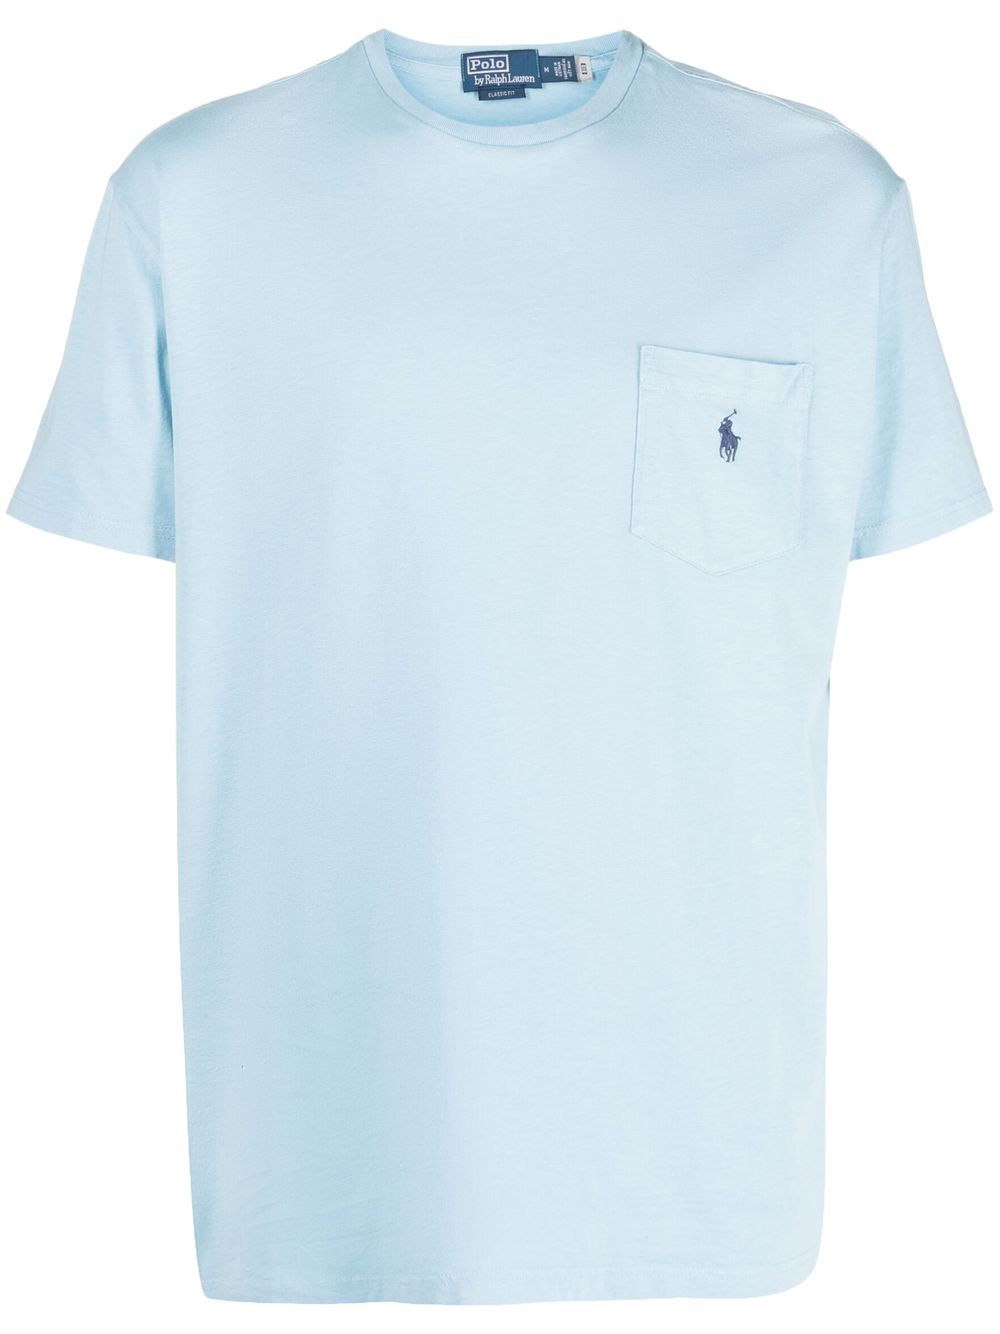 Polo Ralph Lauren chest pocket t-shirt - Blue von Polo Ralph Lauren